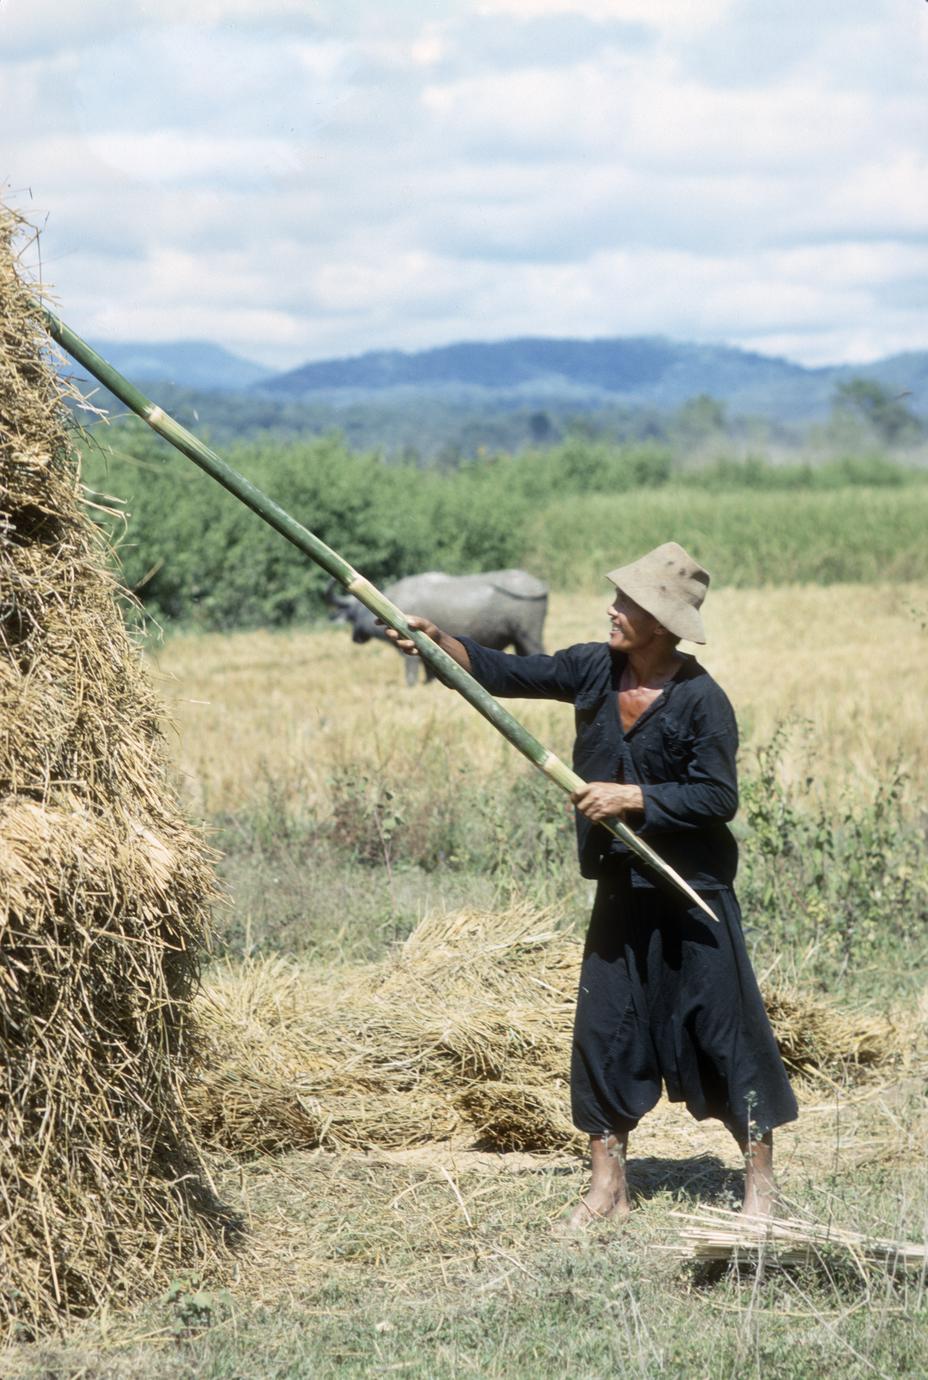 Hmong harvesting rice